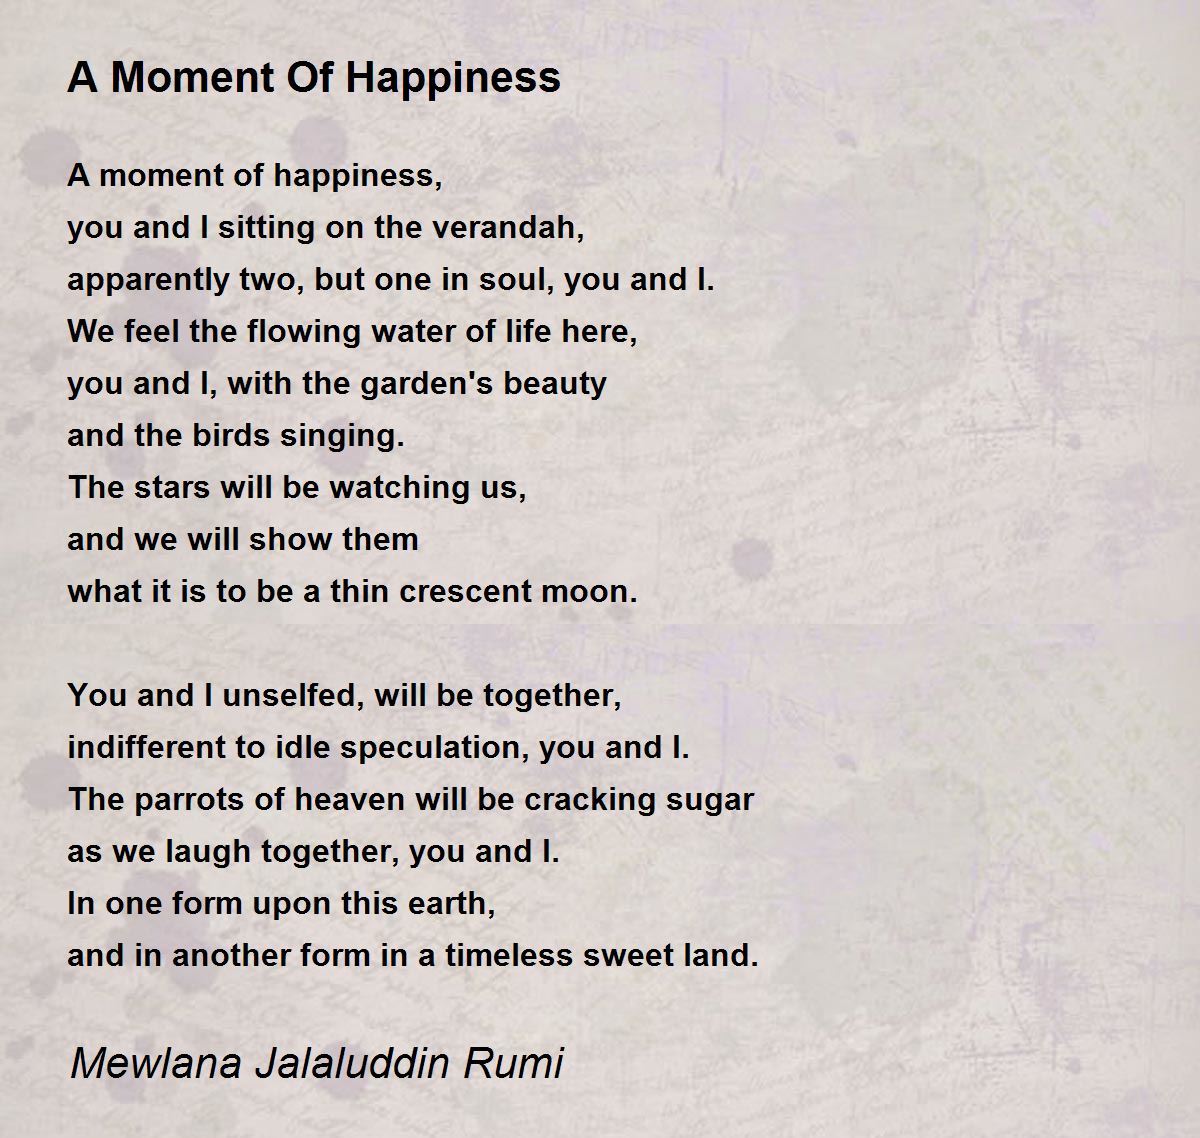 A Moment Of Happiness Poem by Mewlana Jalaluddin Rumi - Poem Hunter